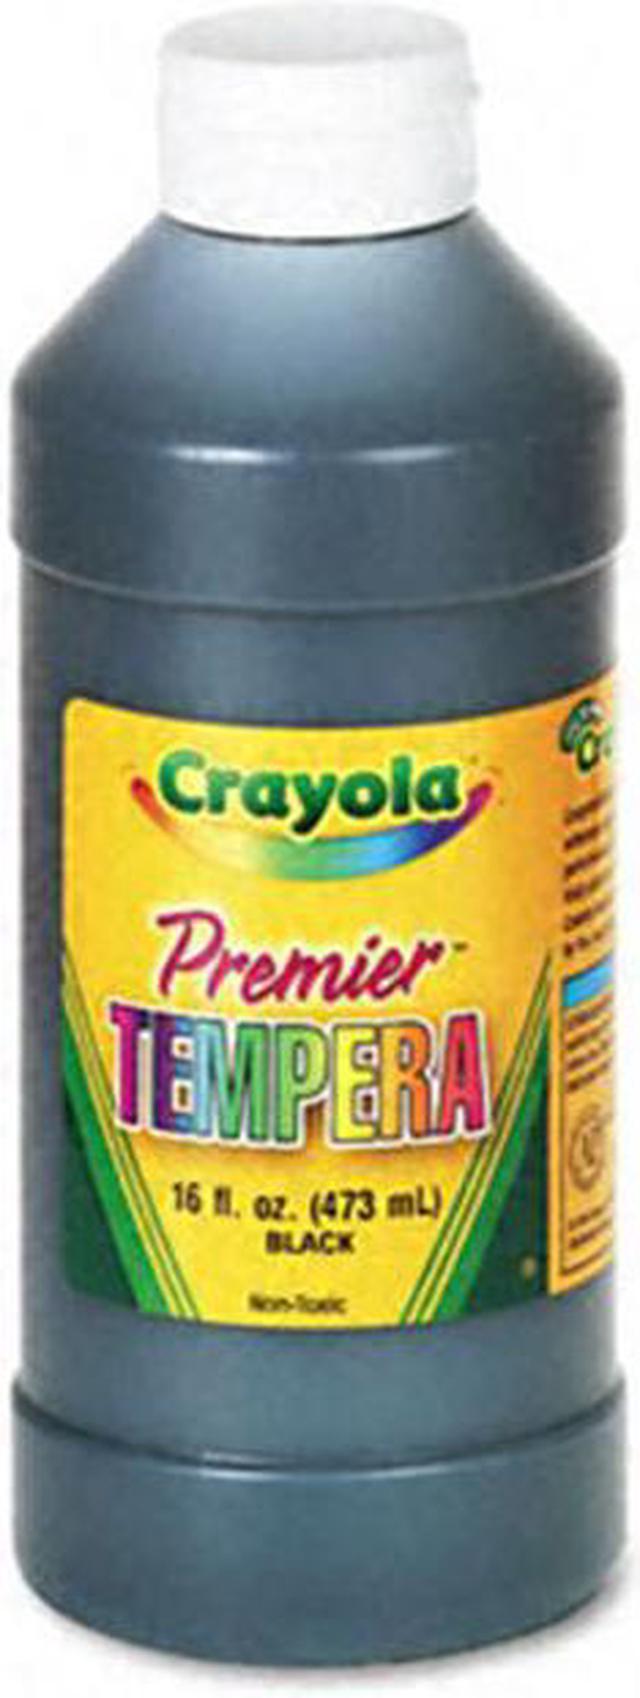 Premier Tempera Paint 16-oz., Crayola.com